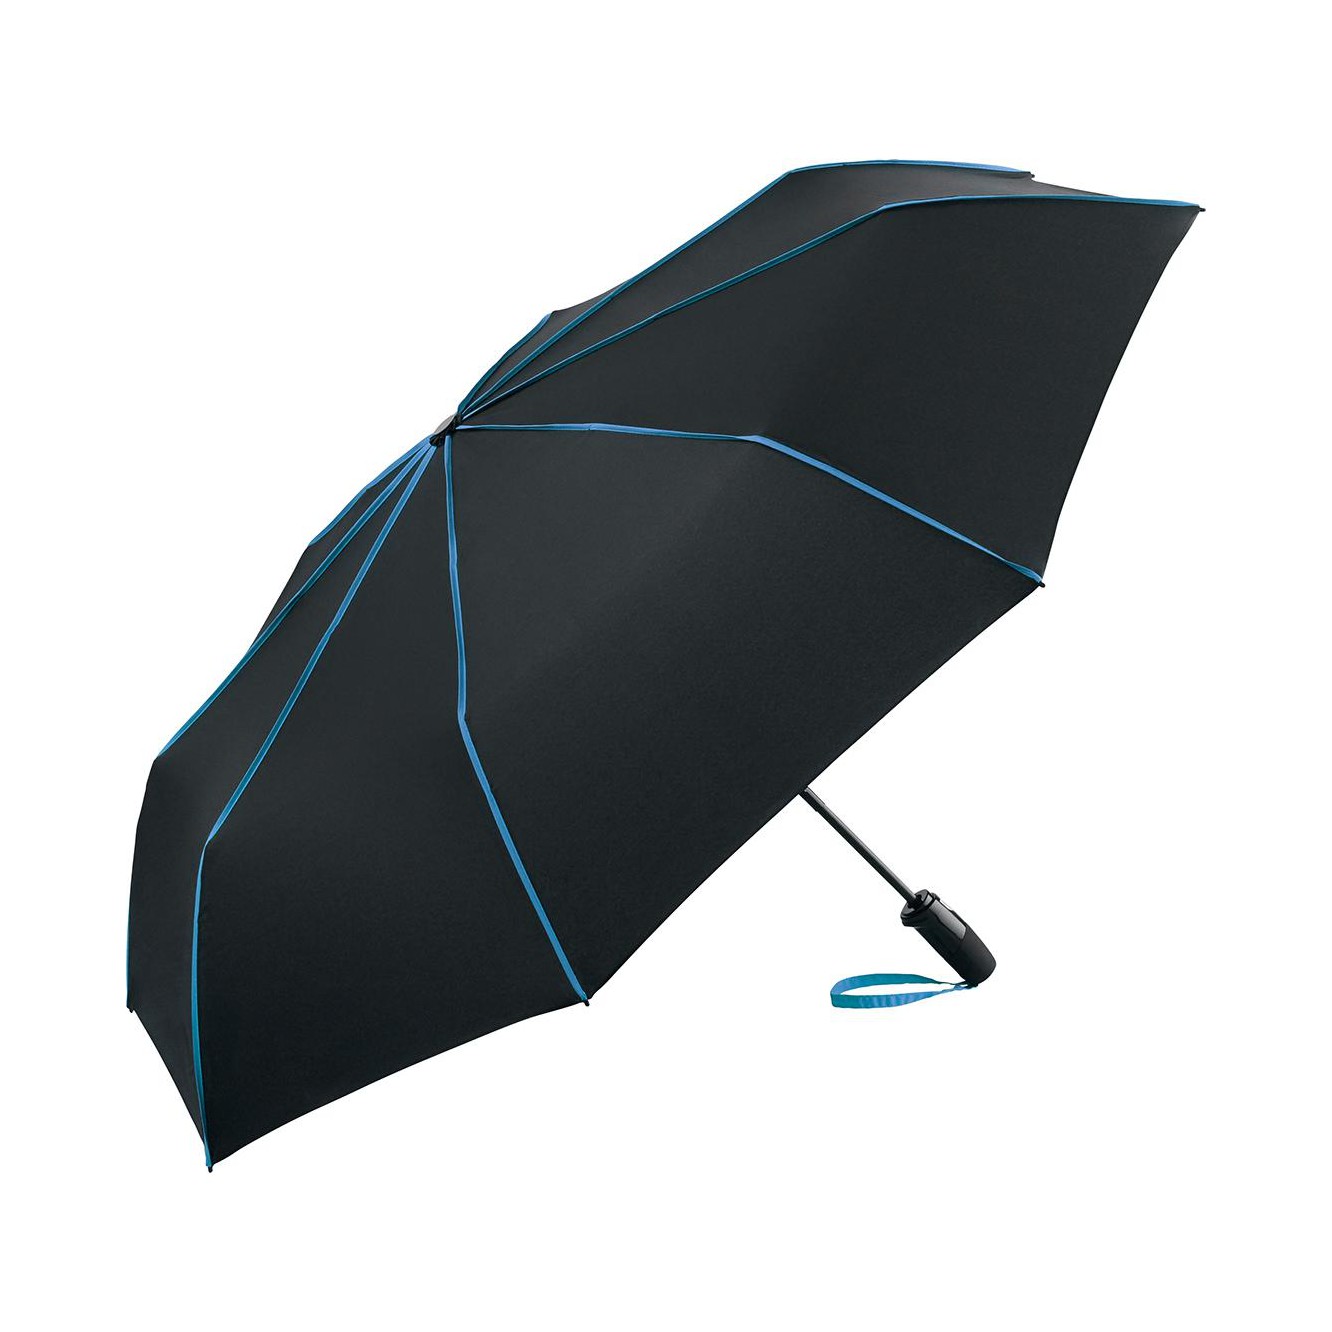 Fare AluMini Lite mini paraplu